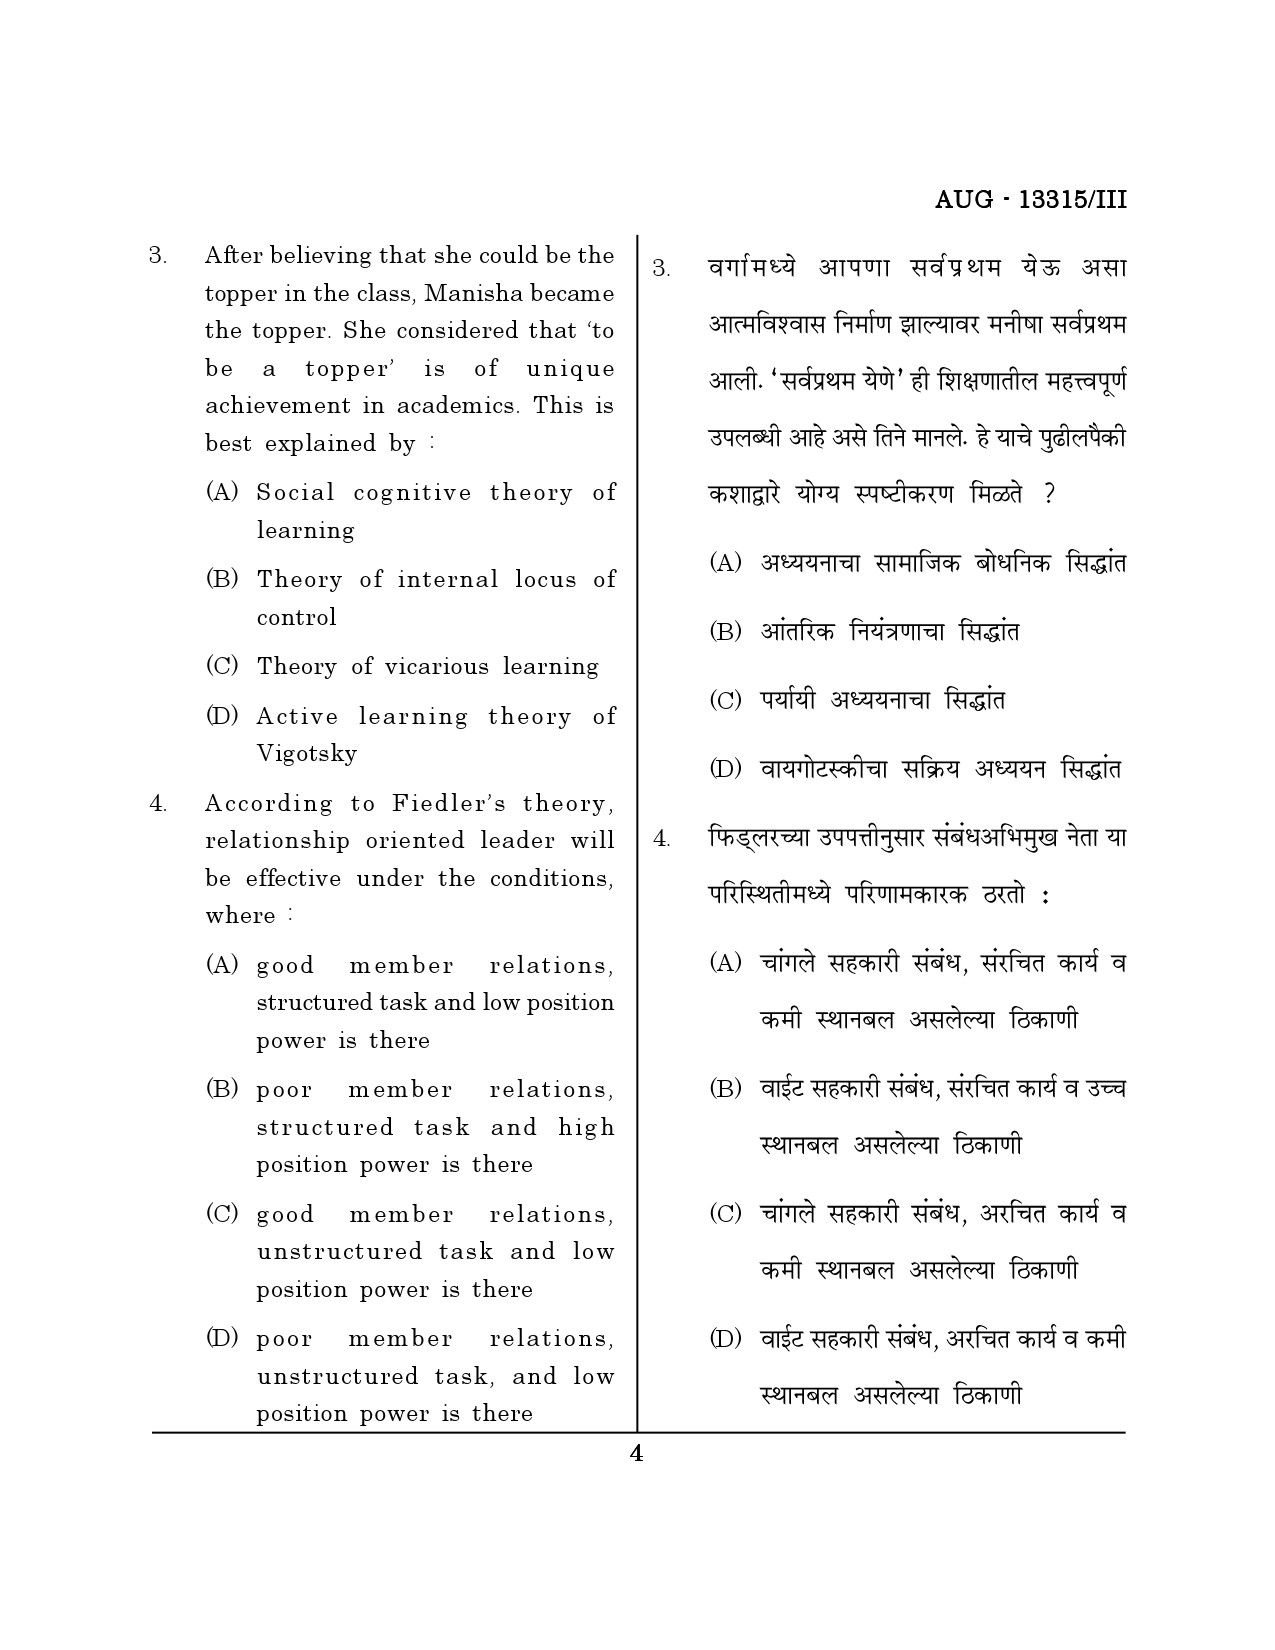 Maharashtra SET Psychology Question Paper III August 2015 3